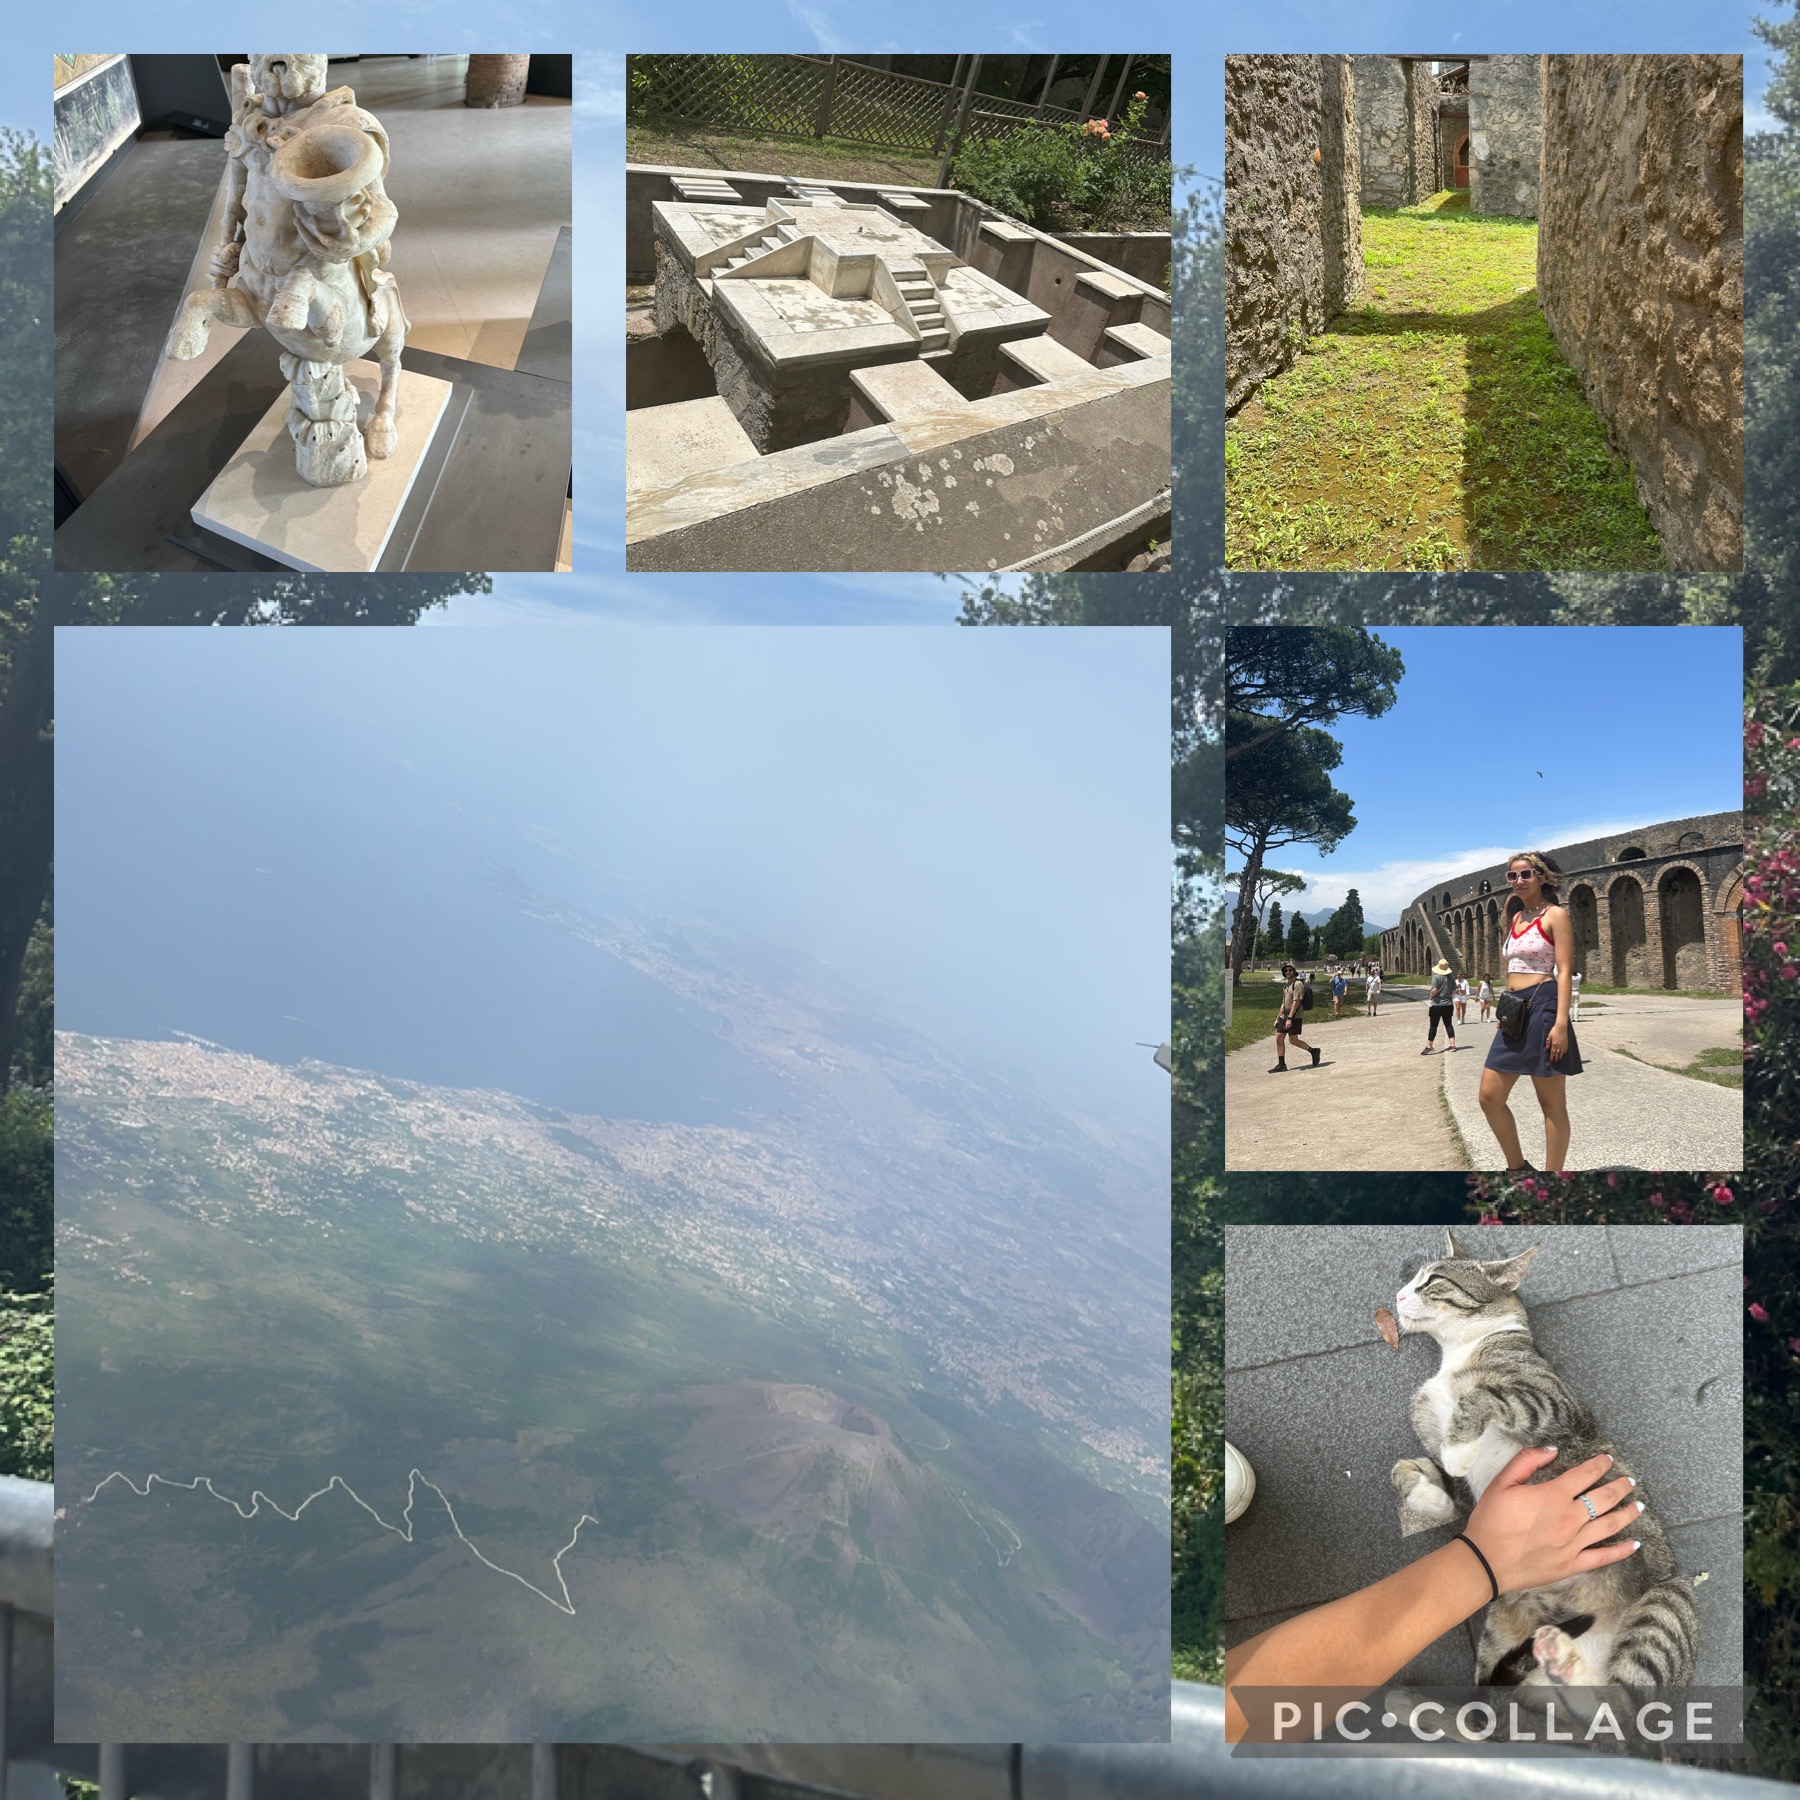 From Barcelona to Naples: Exploring Mount Vesuvius, Pompeii, and Beyond